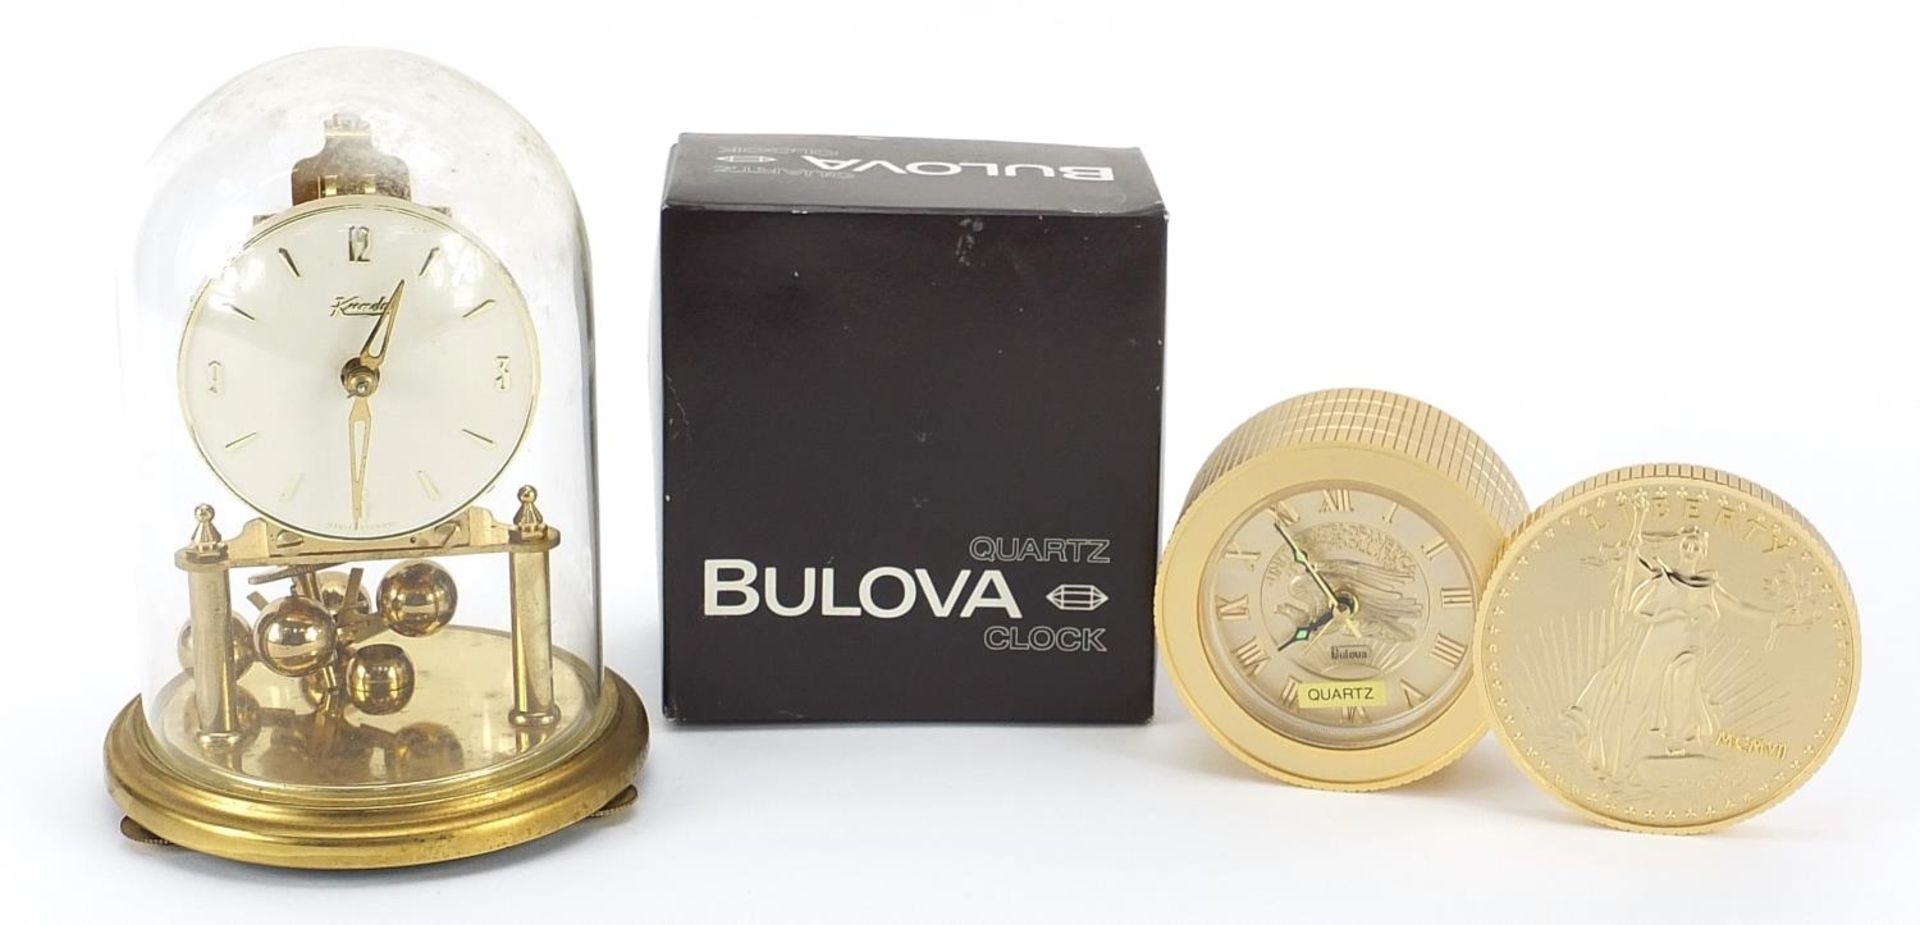 Kundo anniversary clock and Bulova quartz Liberty coin design desk clock, the largest 18cm high